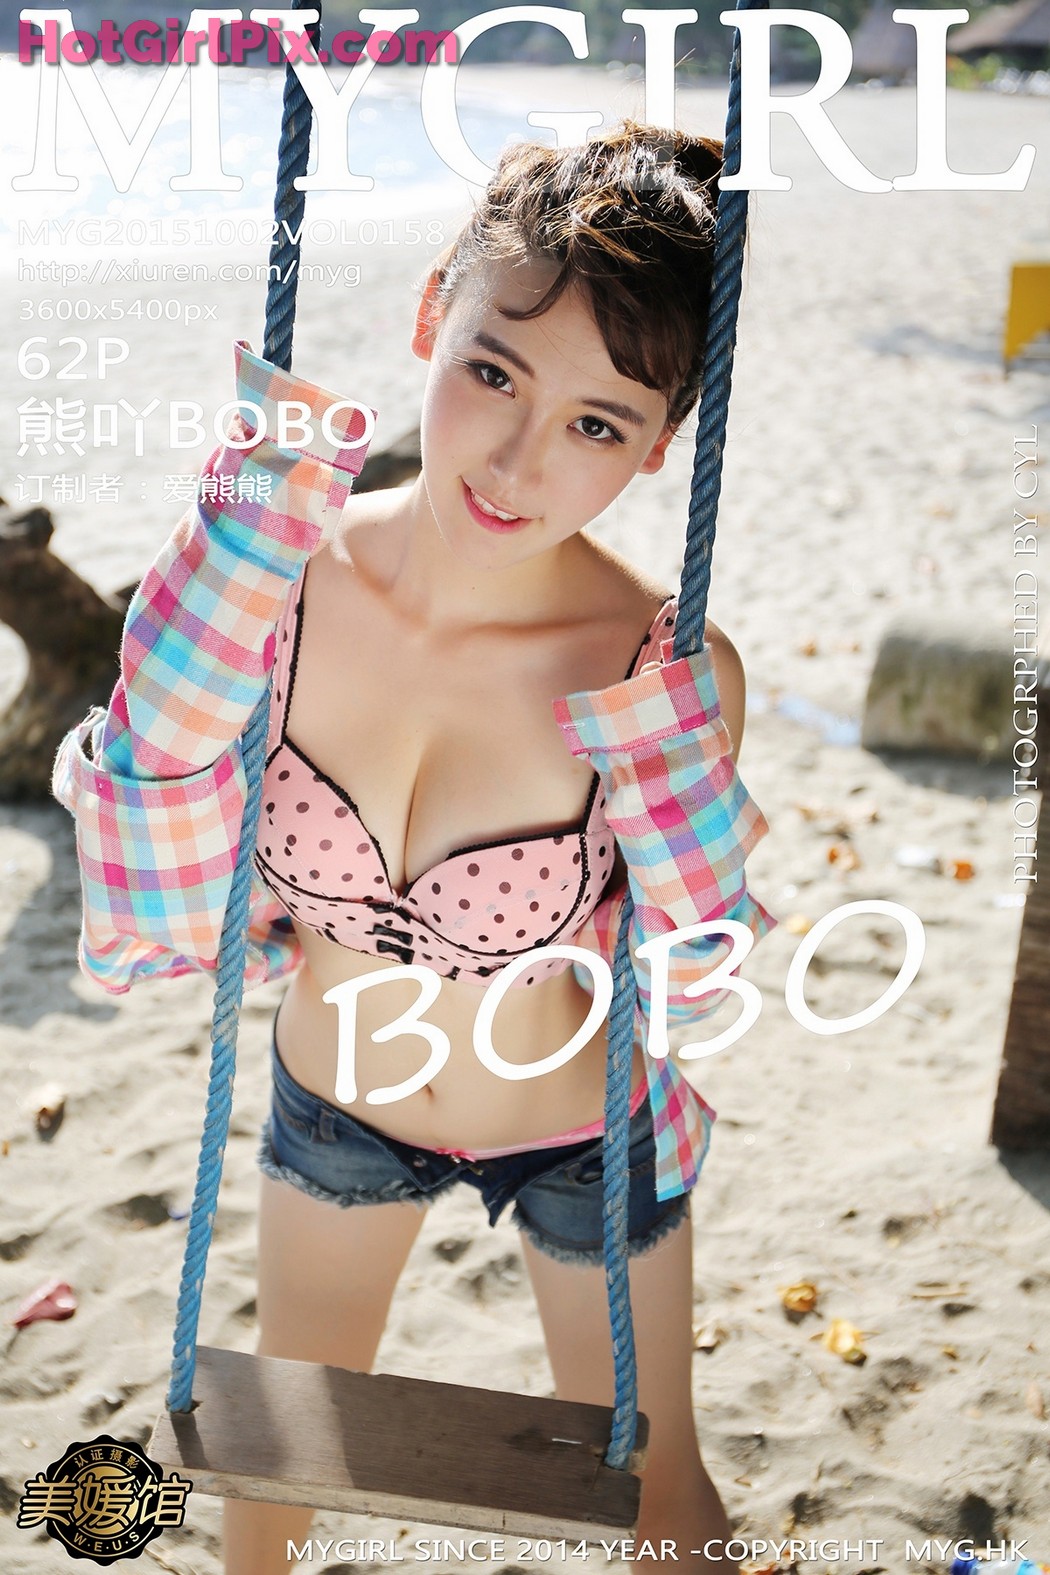 [MyGirl] VOL.158 Xiong Ya 熊吖BOBO Cover Photo